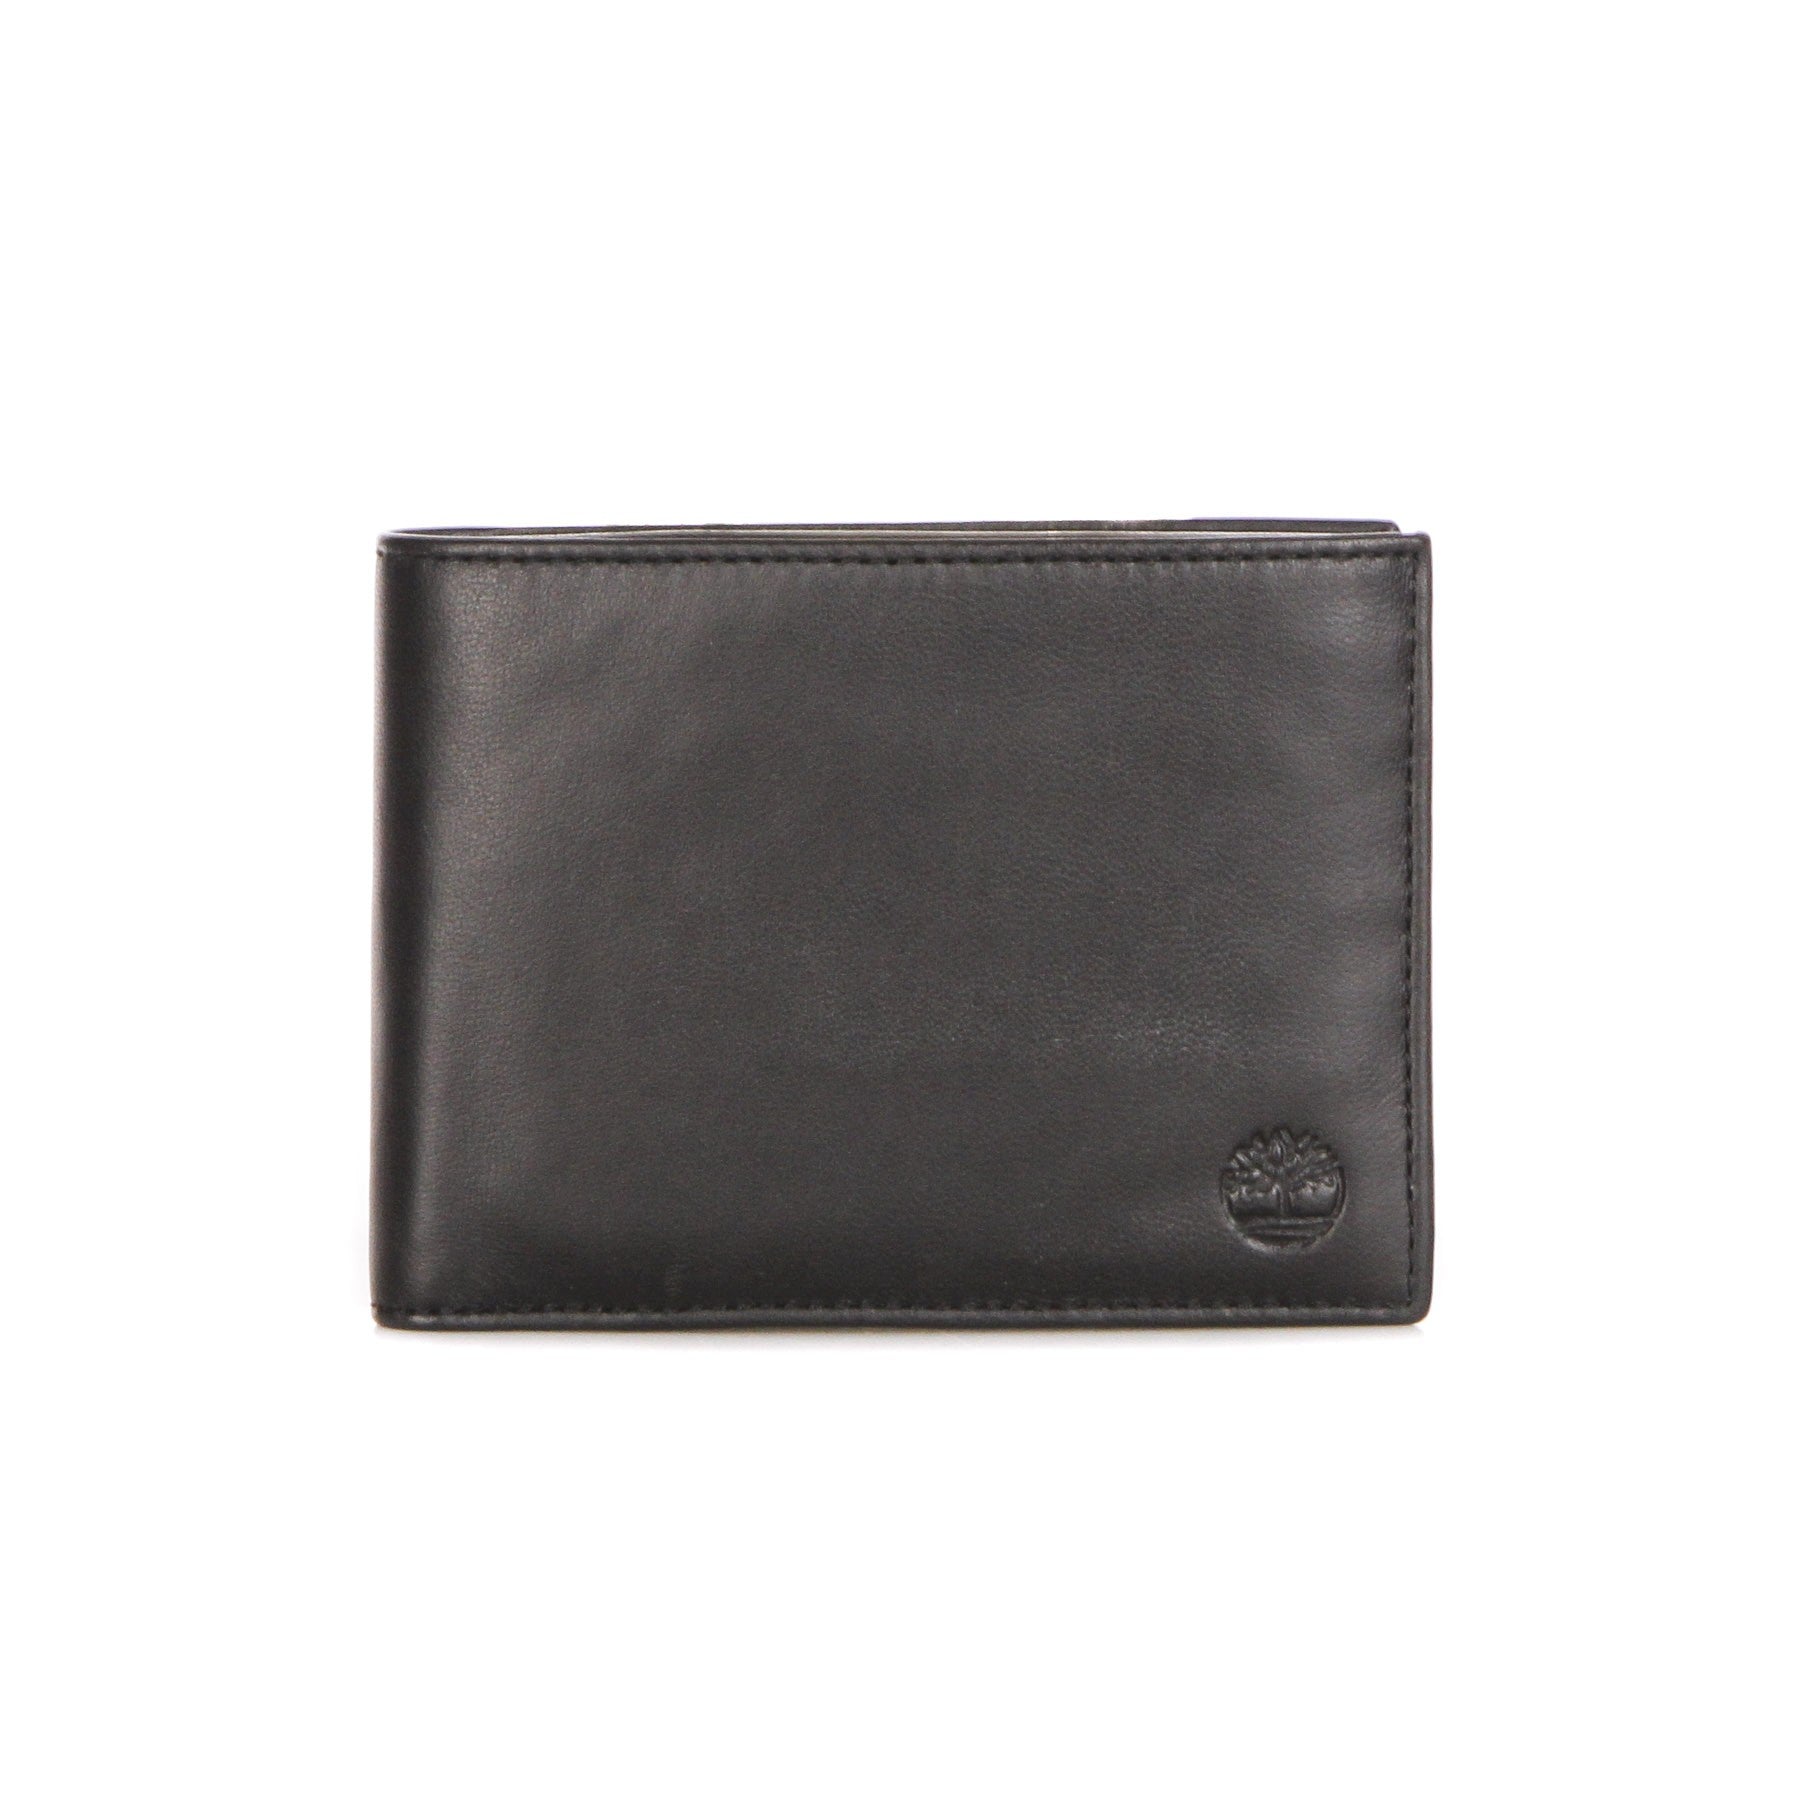 Timberland, Portafoglio Uomo Trifold Wallet With Coin Pocket, Black